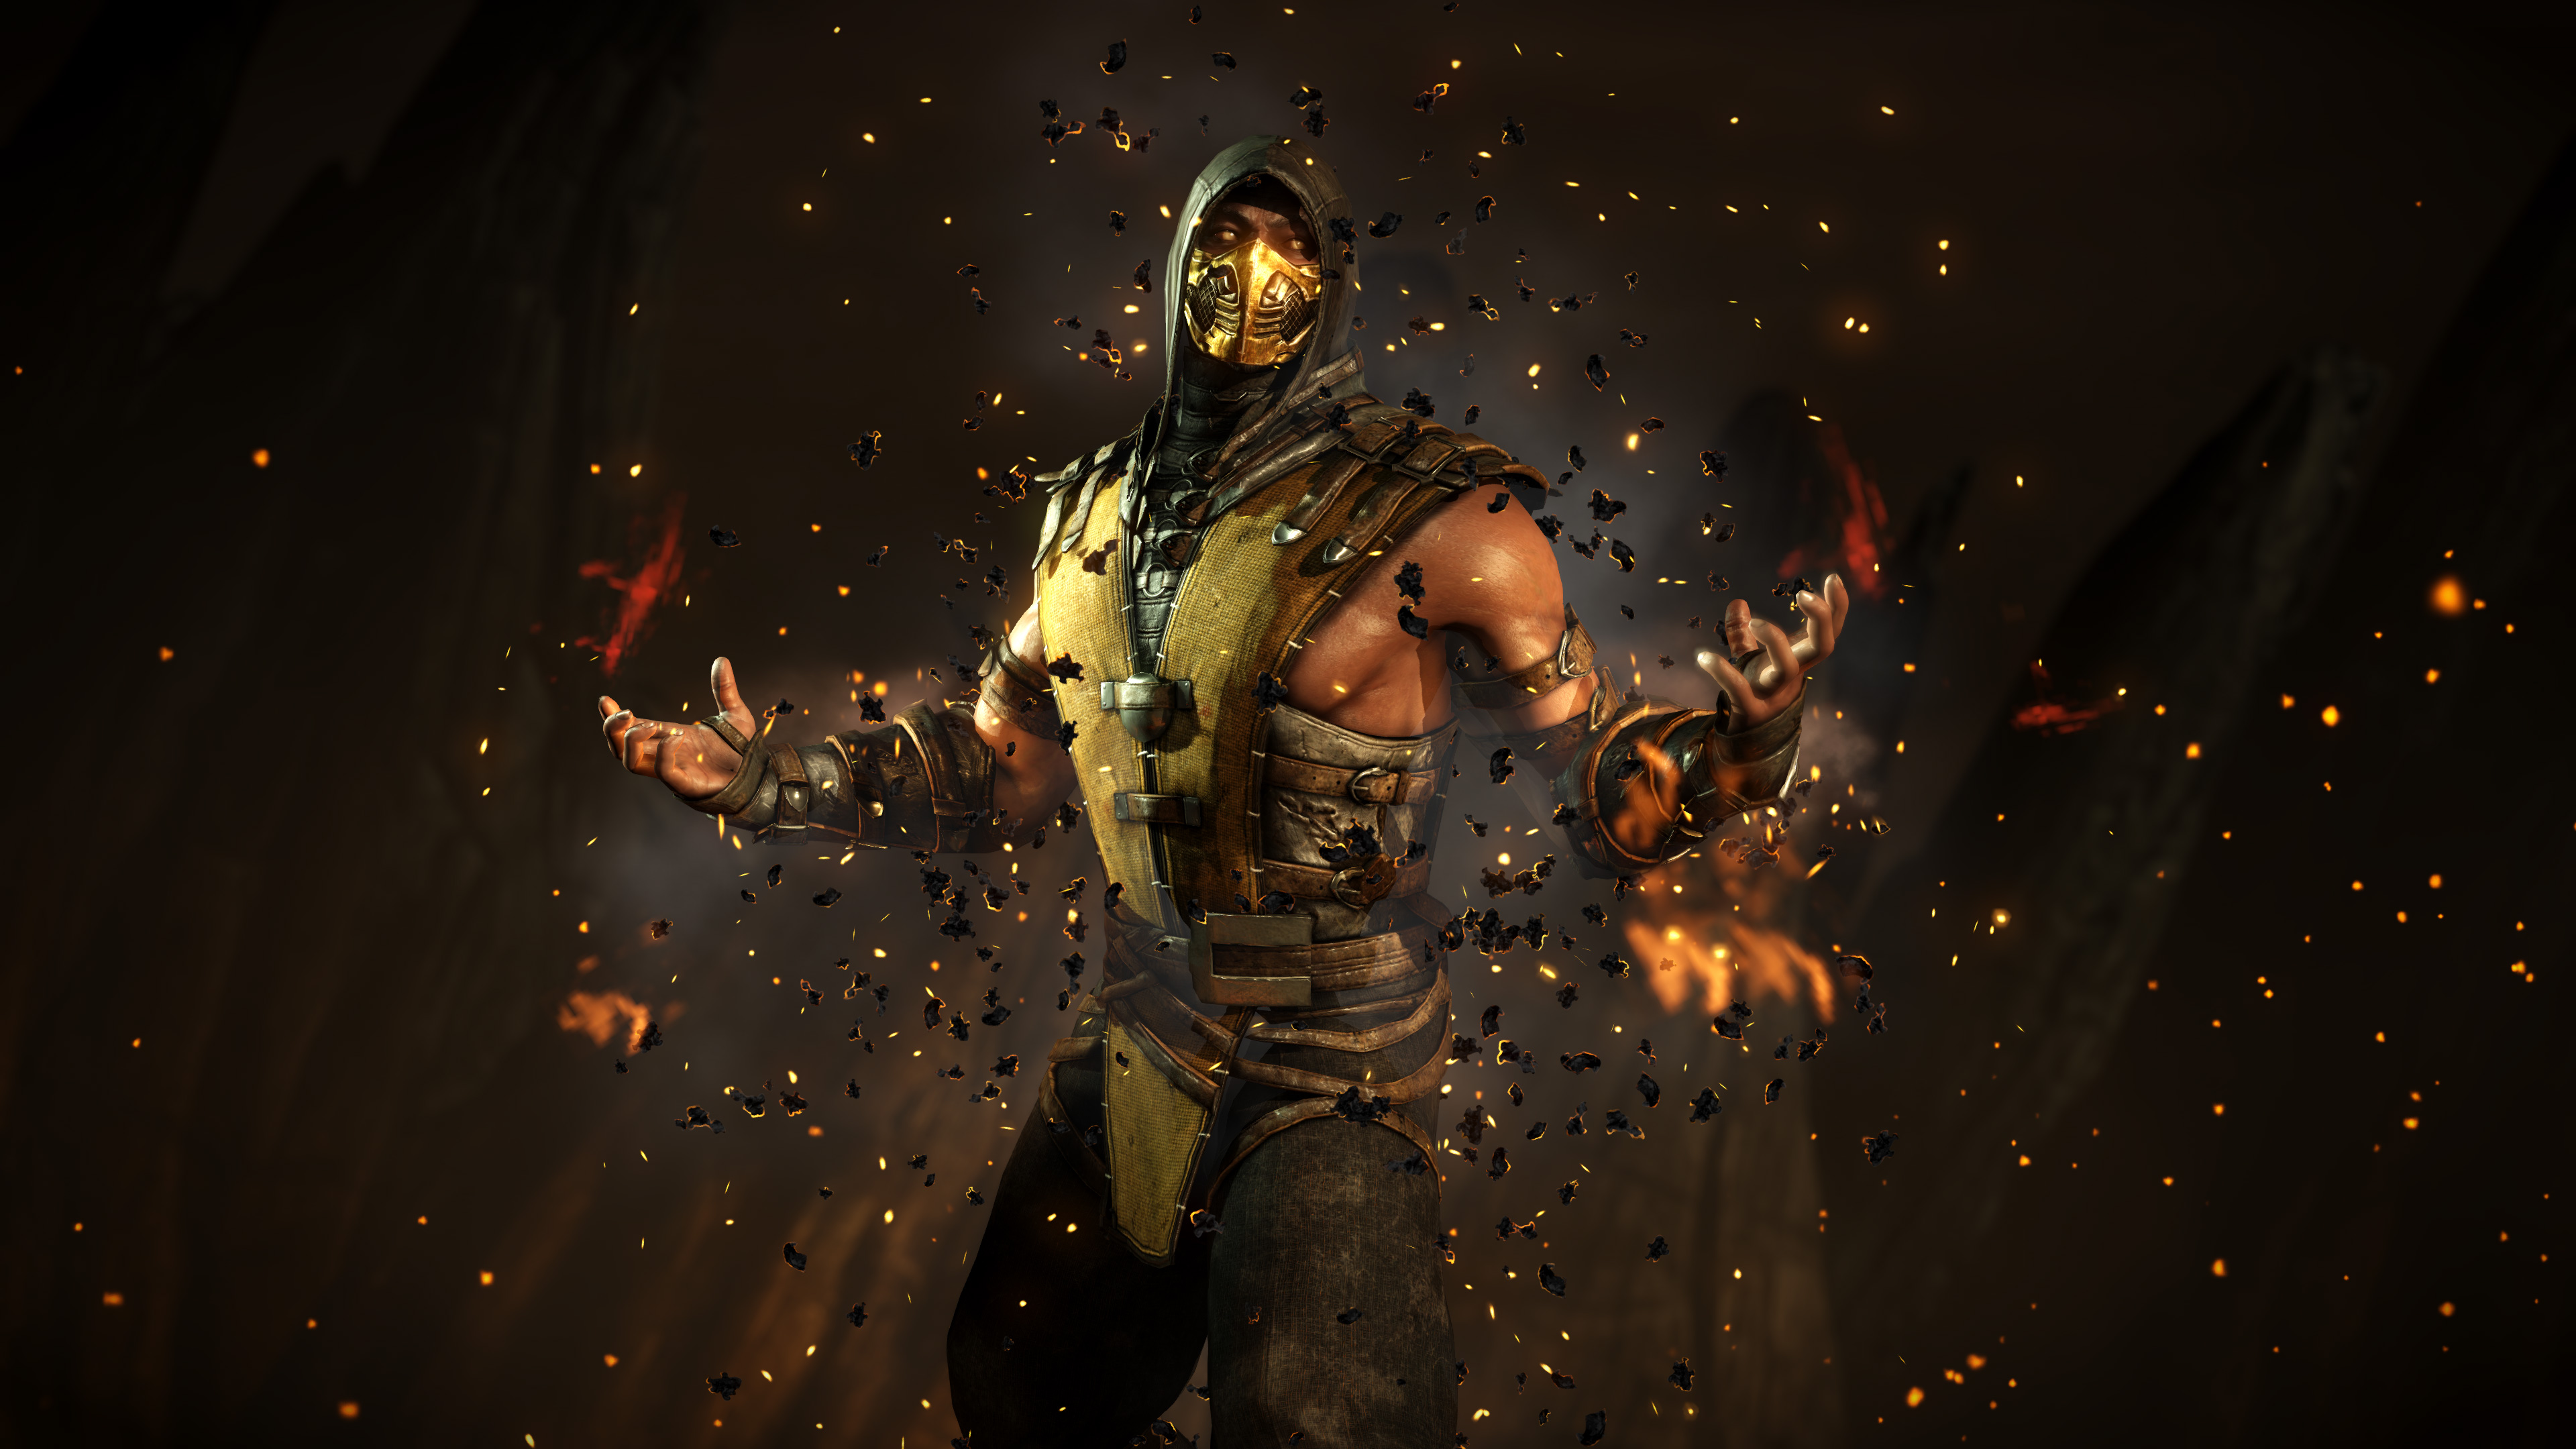 Scorpion Mortal Kombat X 4k Wallpaper,HD Games Wallpapers,4k Wallpapers